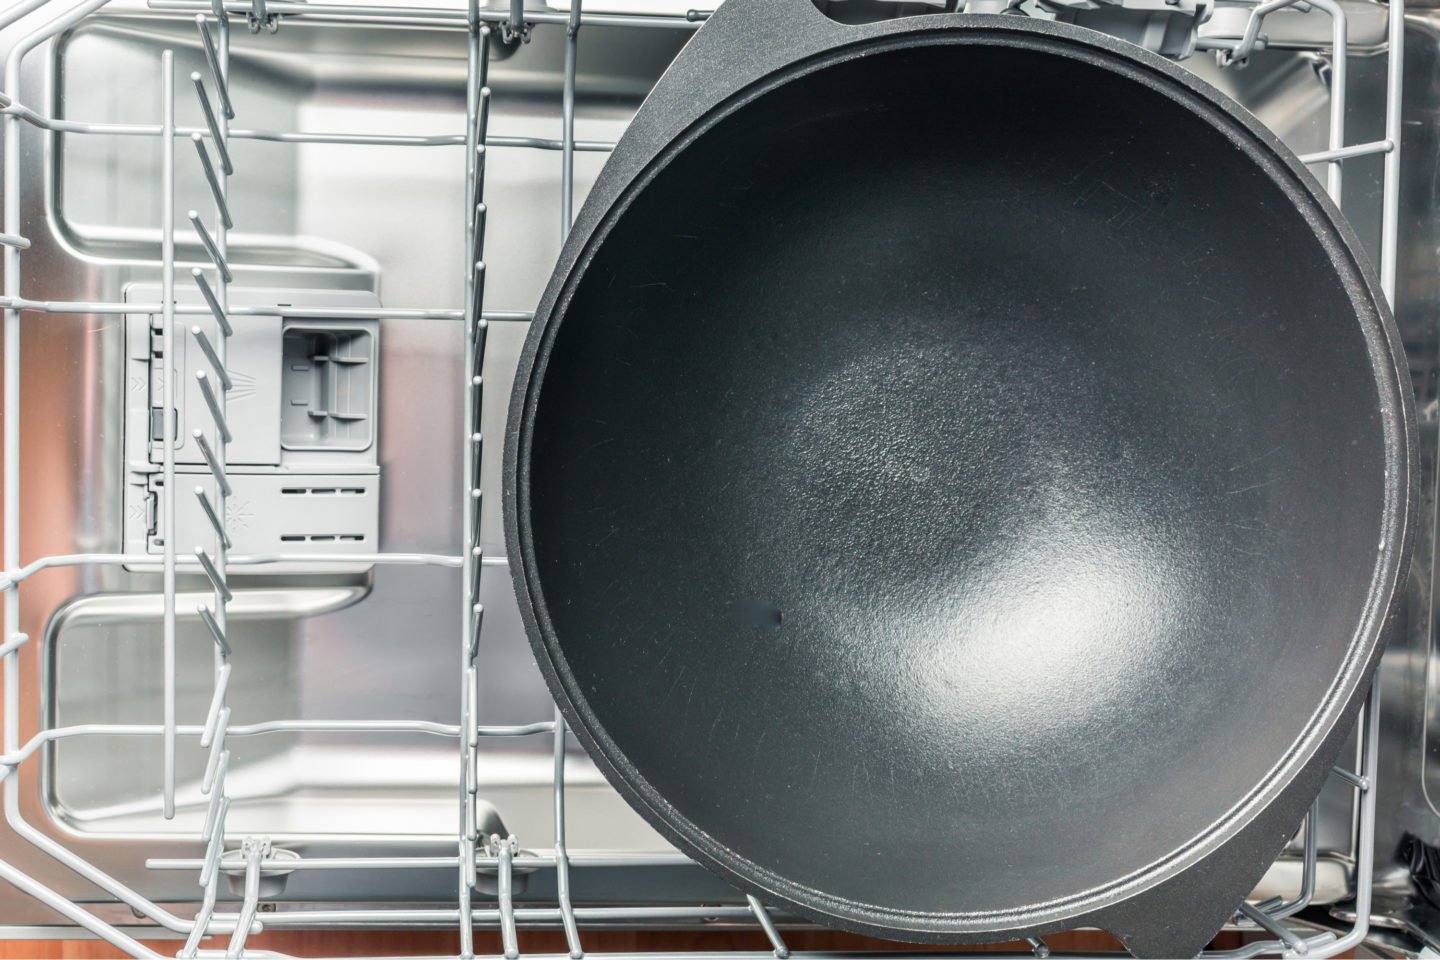 Cast Iron Pot In Dishwasher